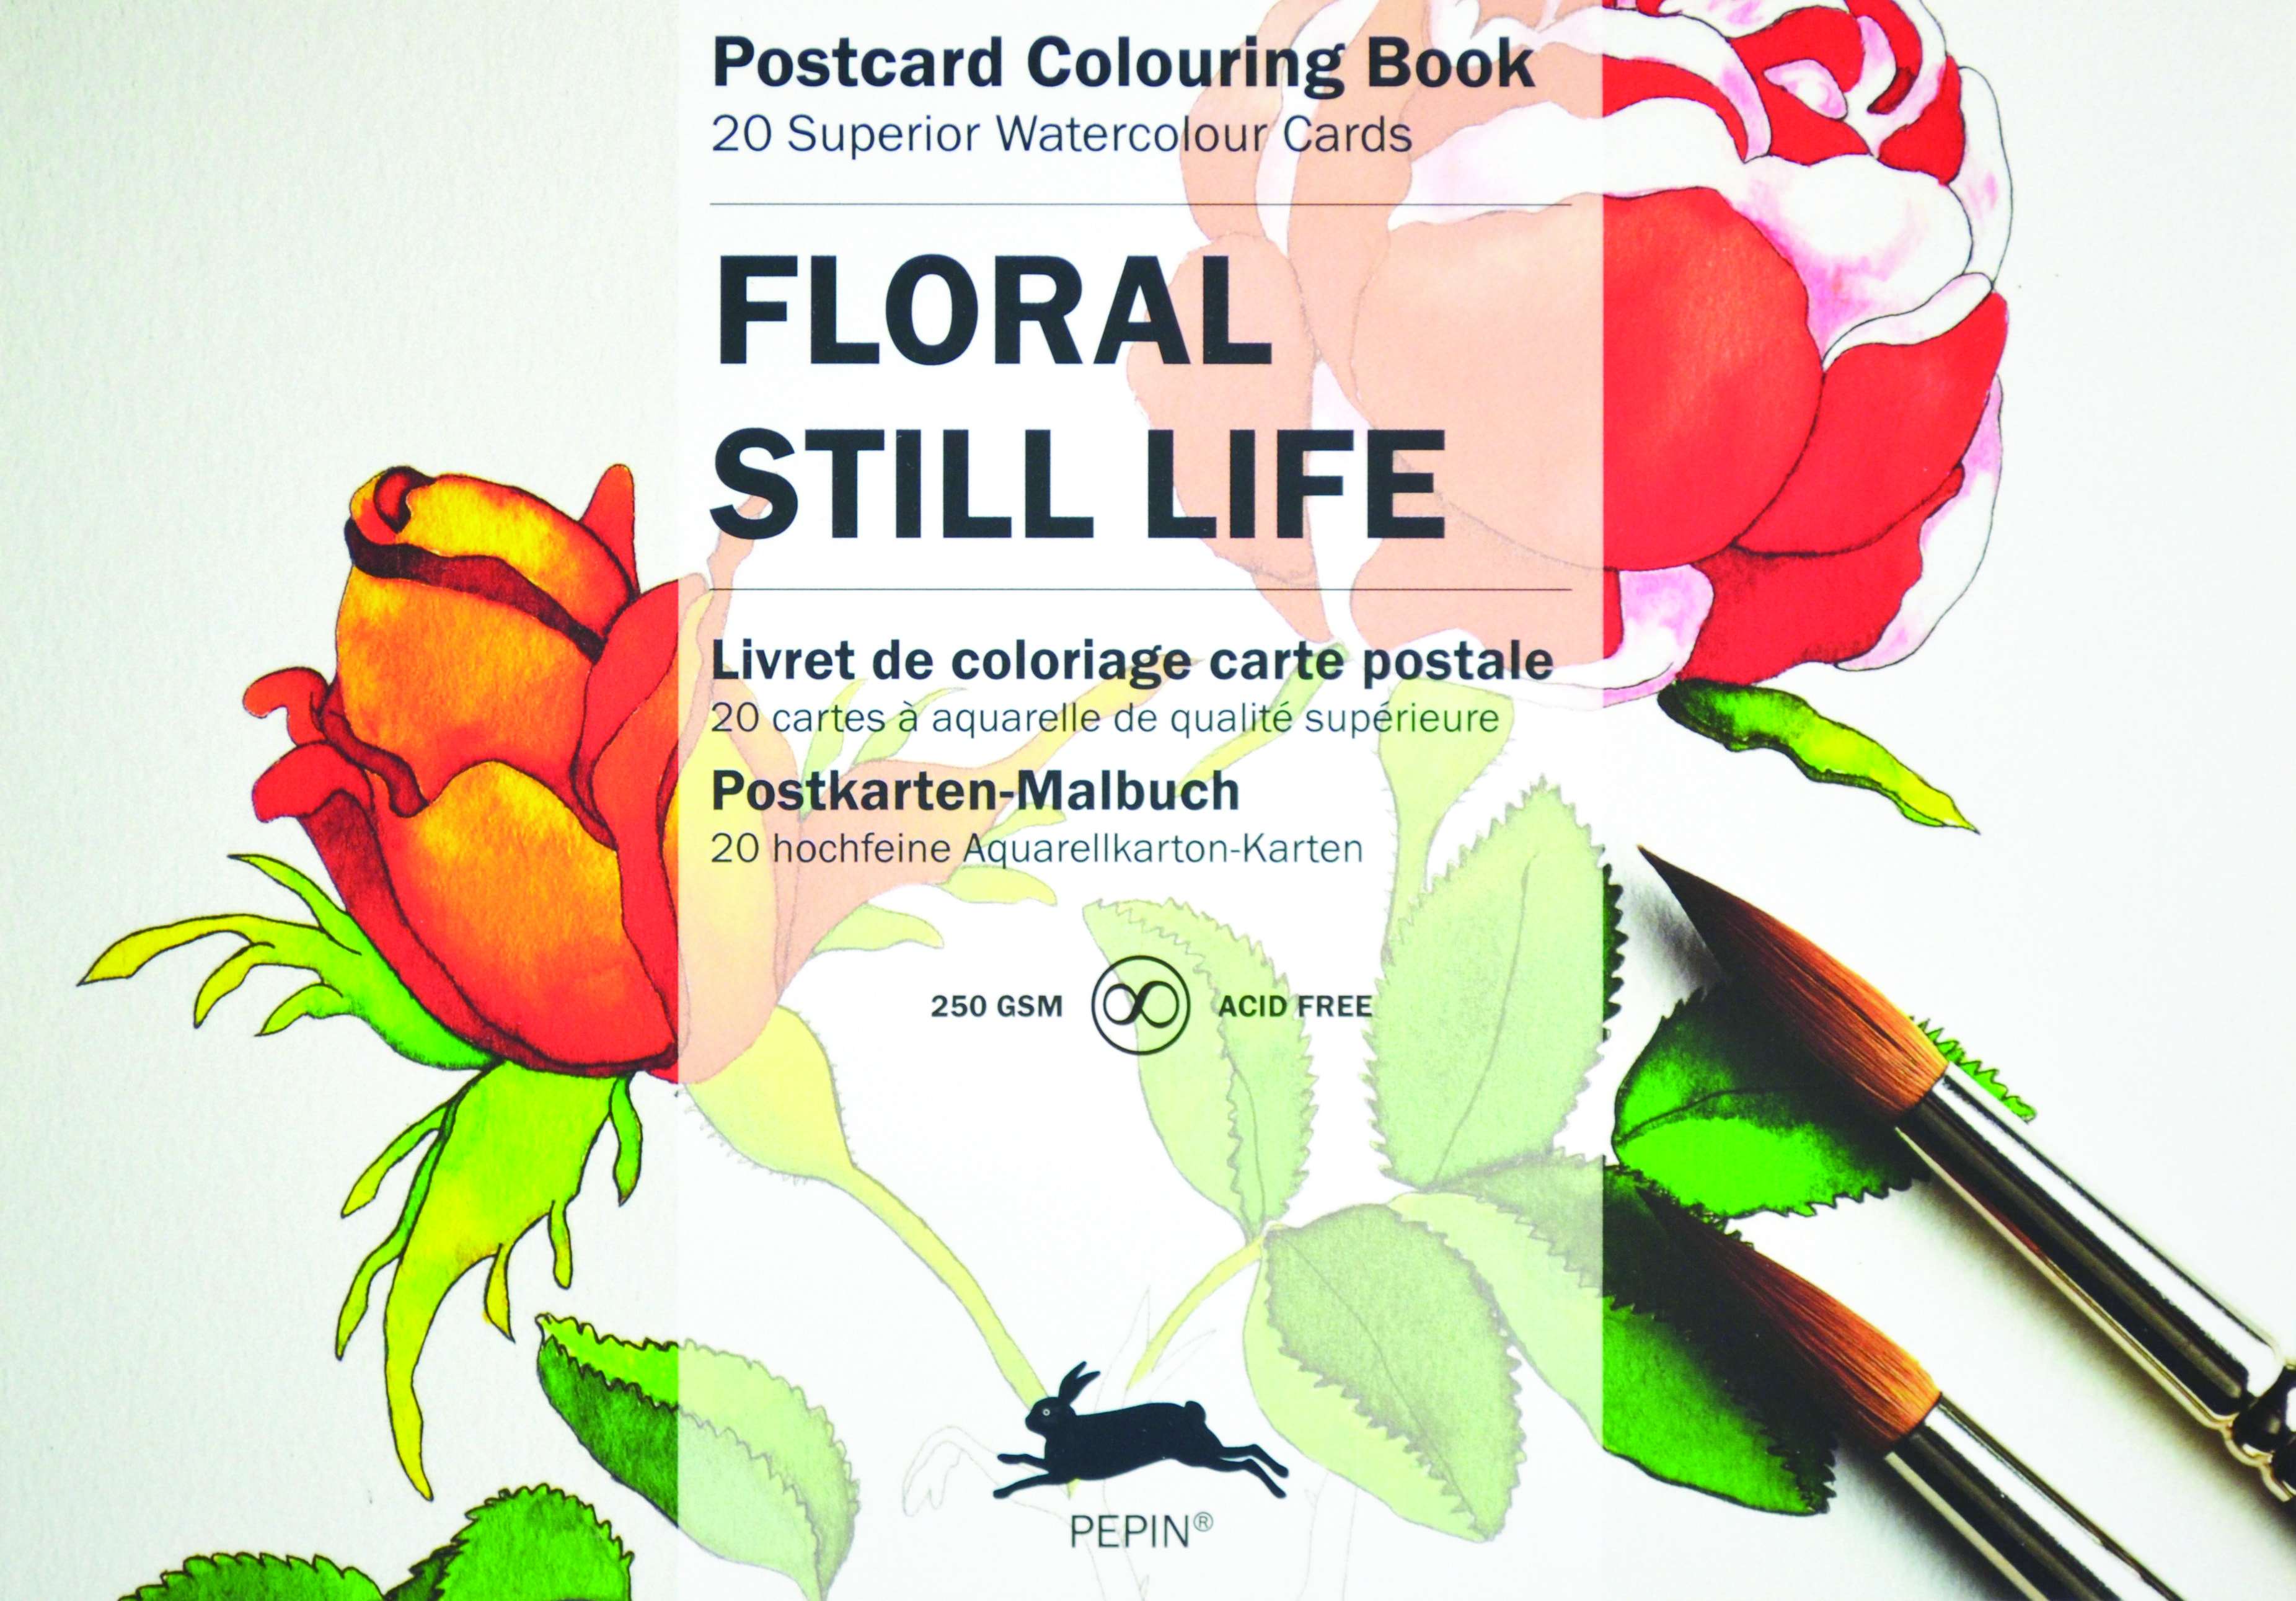 FLORAL STILL LIFE: PEPIN POSTCARD COLOURING BOOK